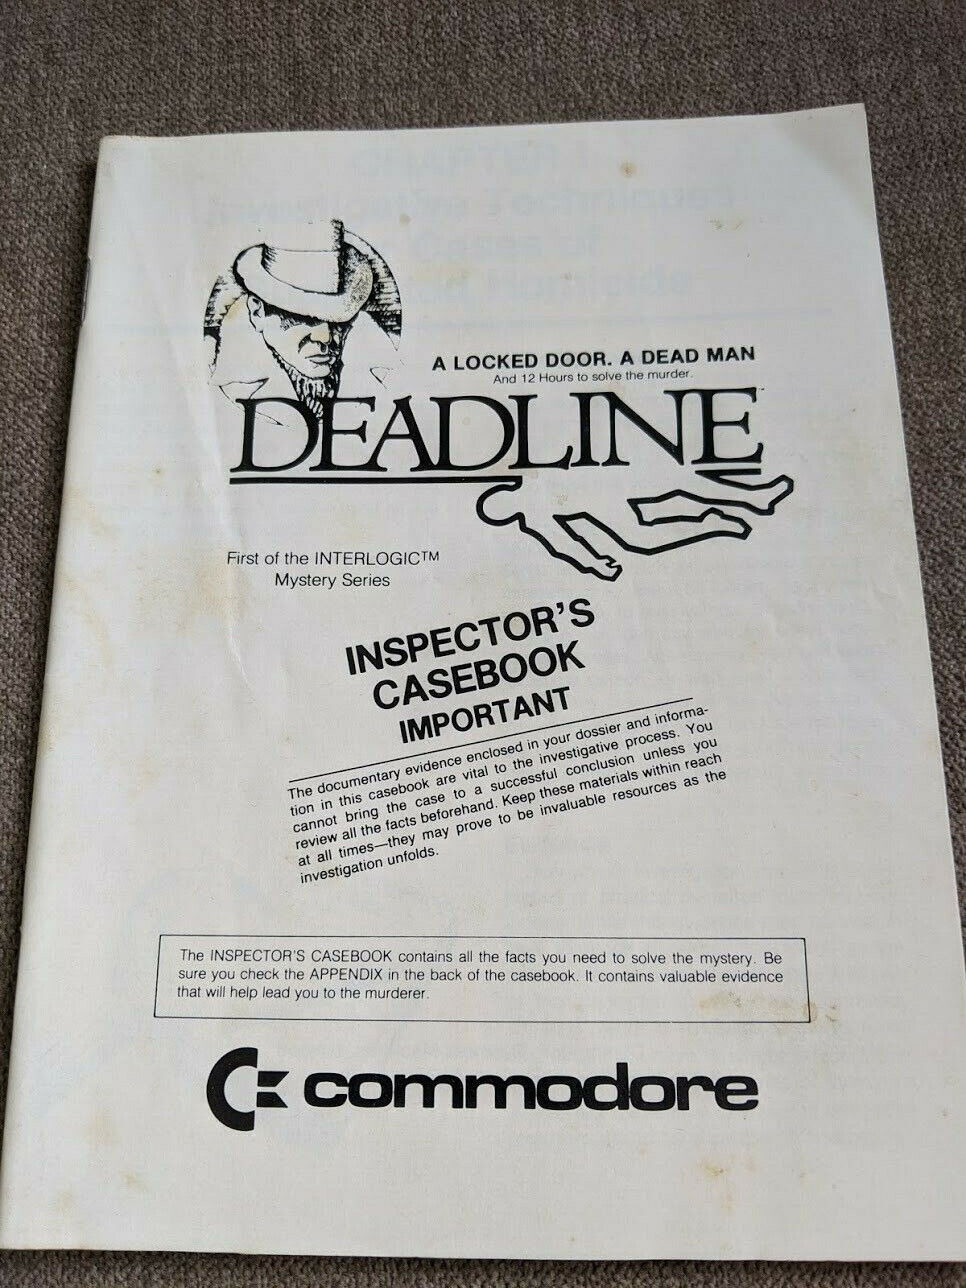 Original manual for Deadline videogame, Commodore 64, RARE Canadian version